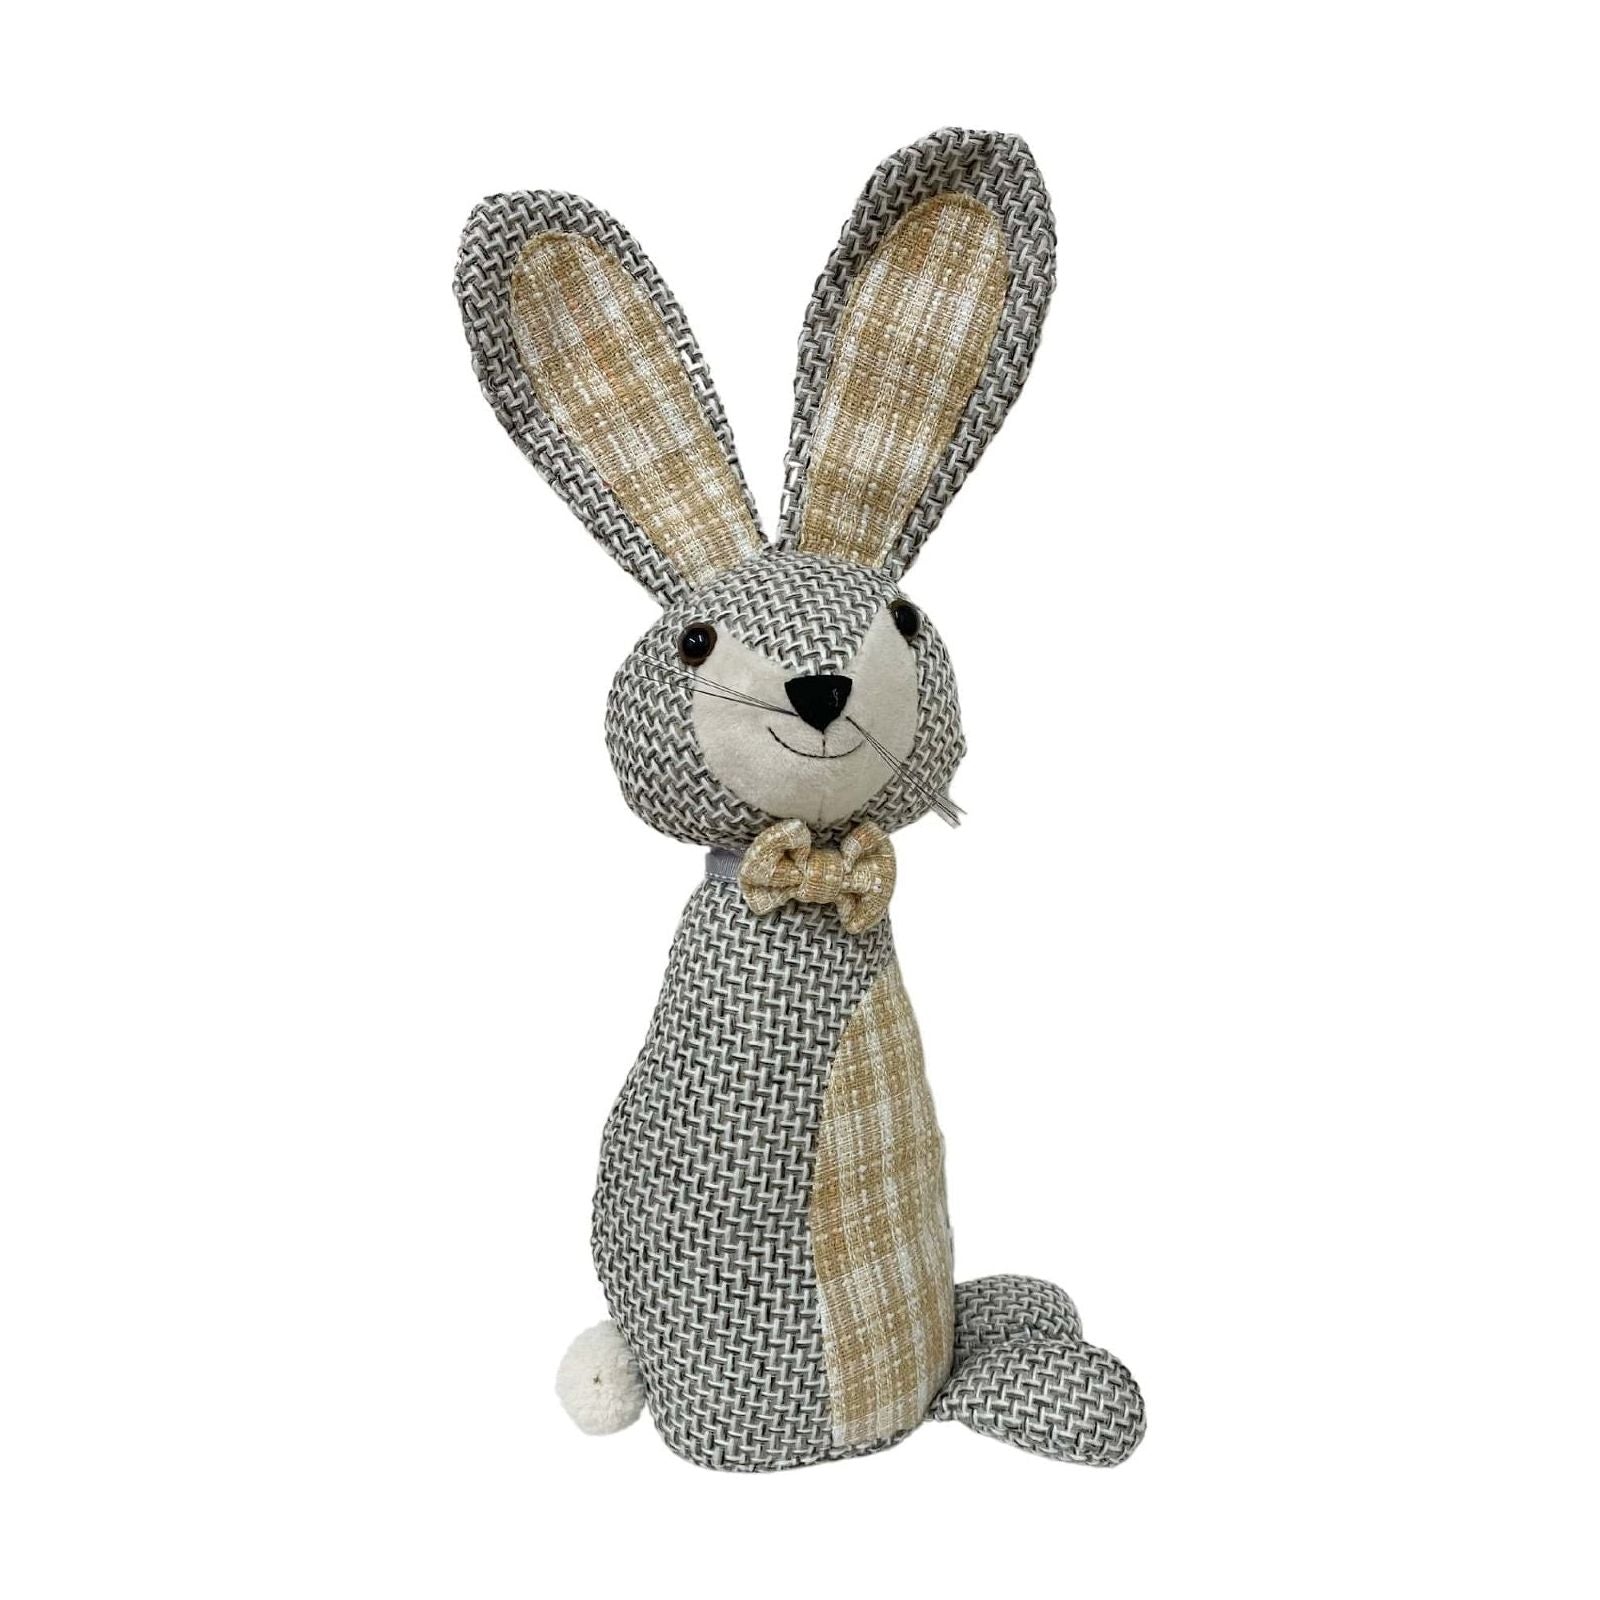 Woven Fabric Rabbit Doorstop - Ashton and Finch